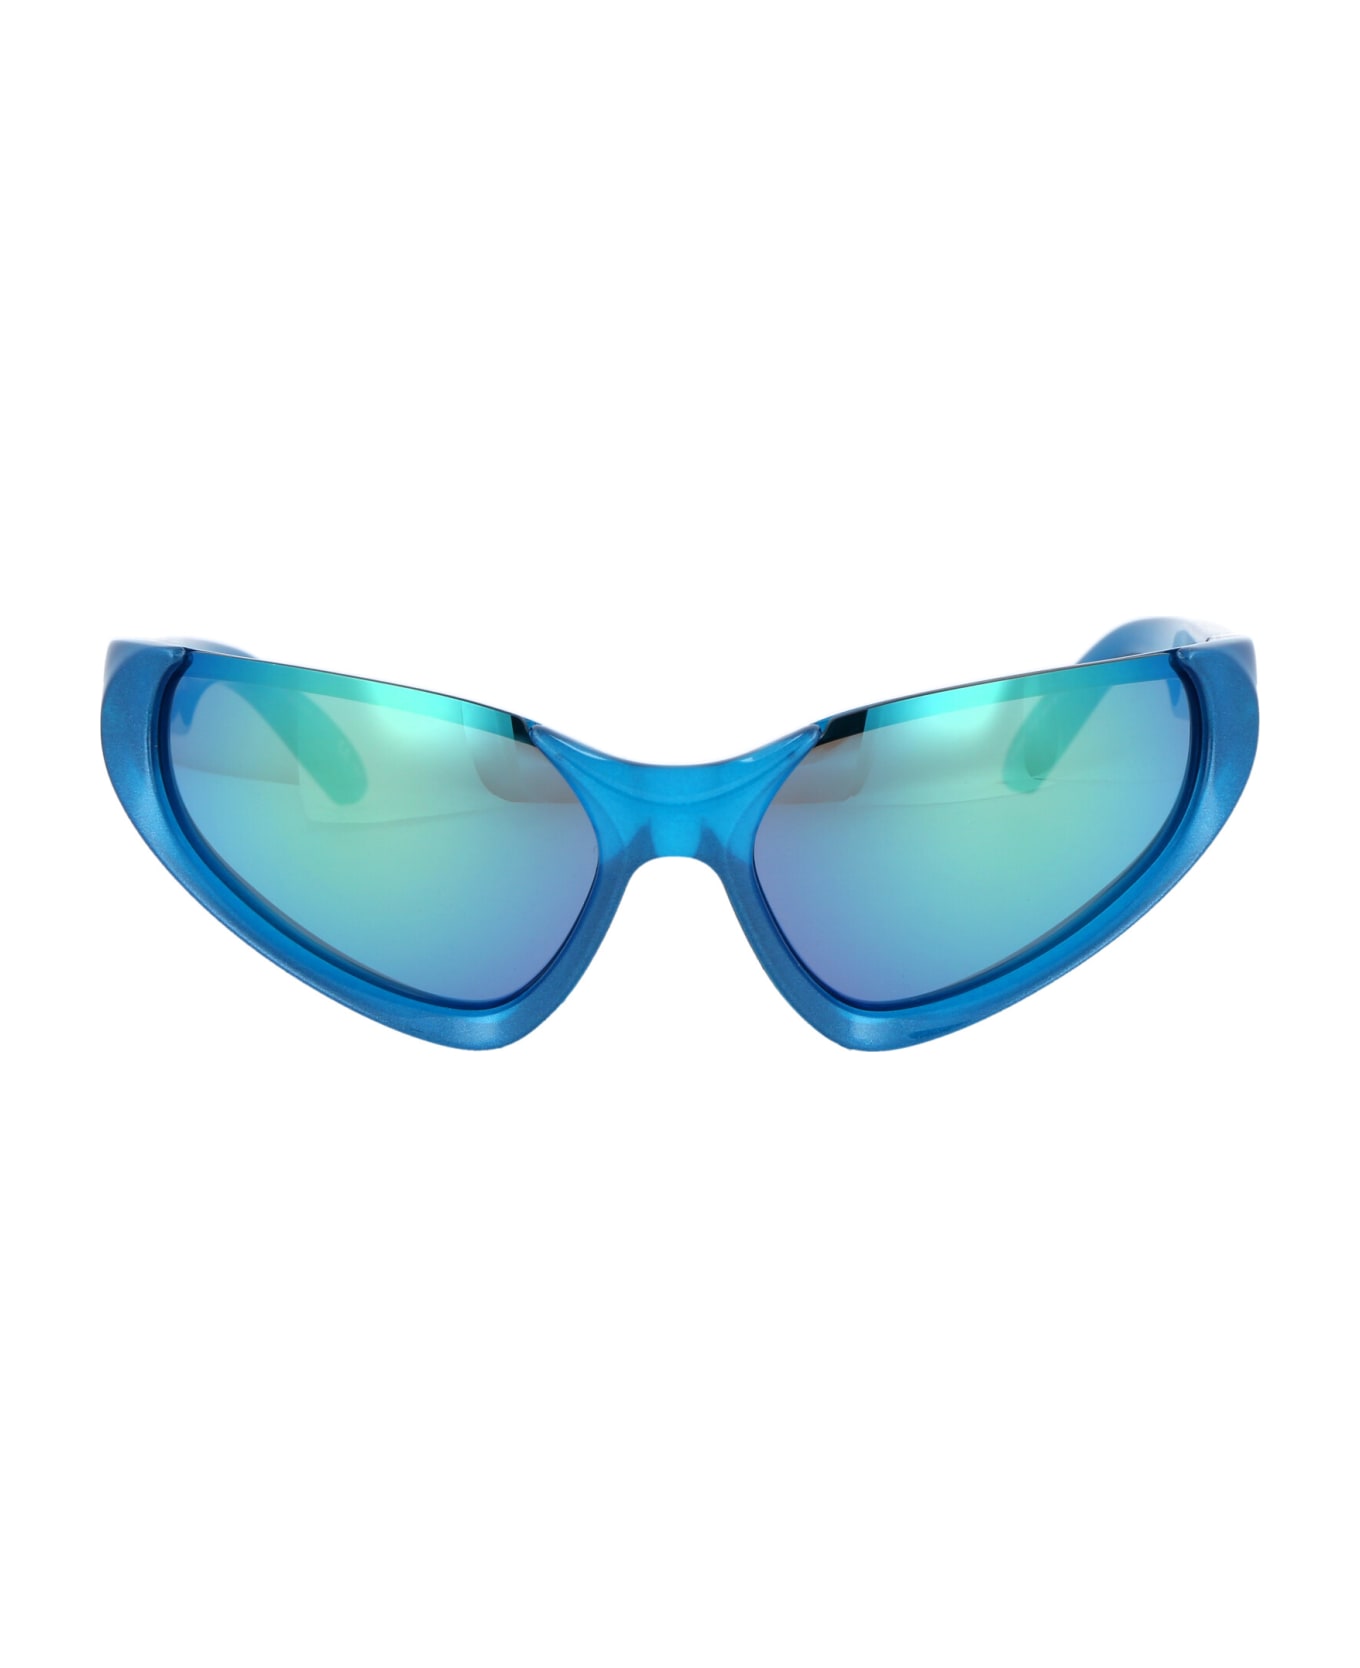 Balenciaga Eyewear Bb0202s Sunglasses - 003 LIGHT BLUE LIGHT BLUE GREEN サングラス